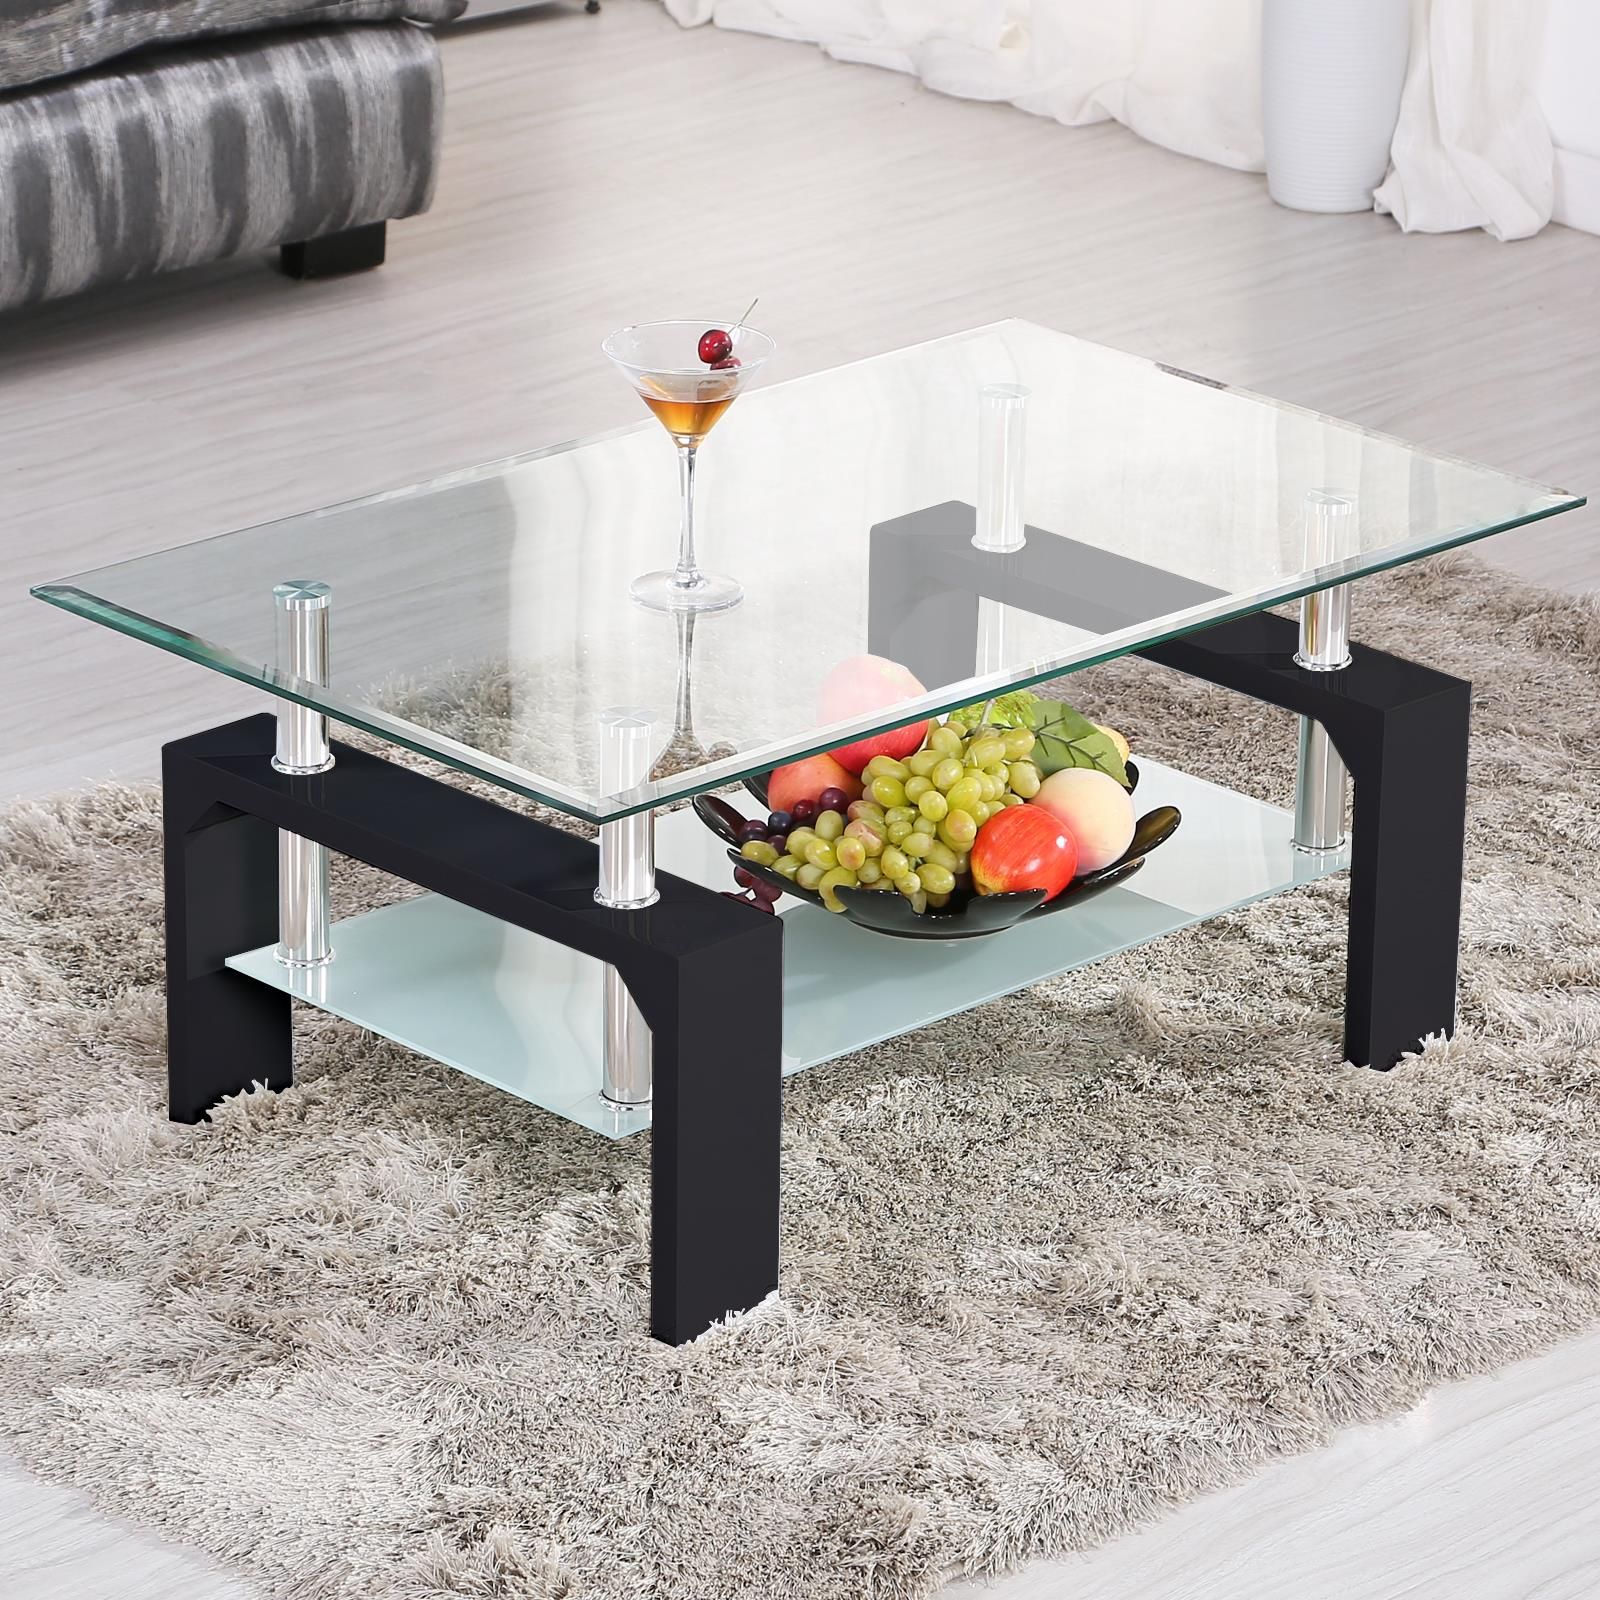 Ktaxon Rectangular Glass Coffee Table Shelf Wood Living Room Furniture  Chrome Base, Black – Walmart With Regard To Glass Coffee Tables With Storage Shelf (View 13 of 20)